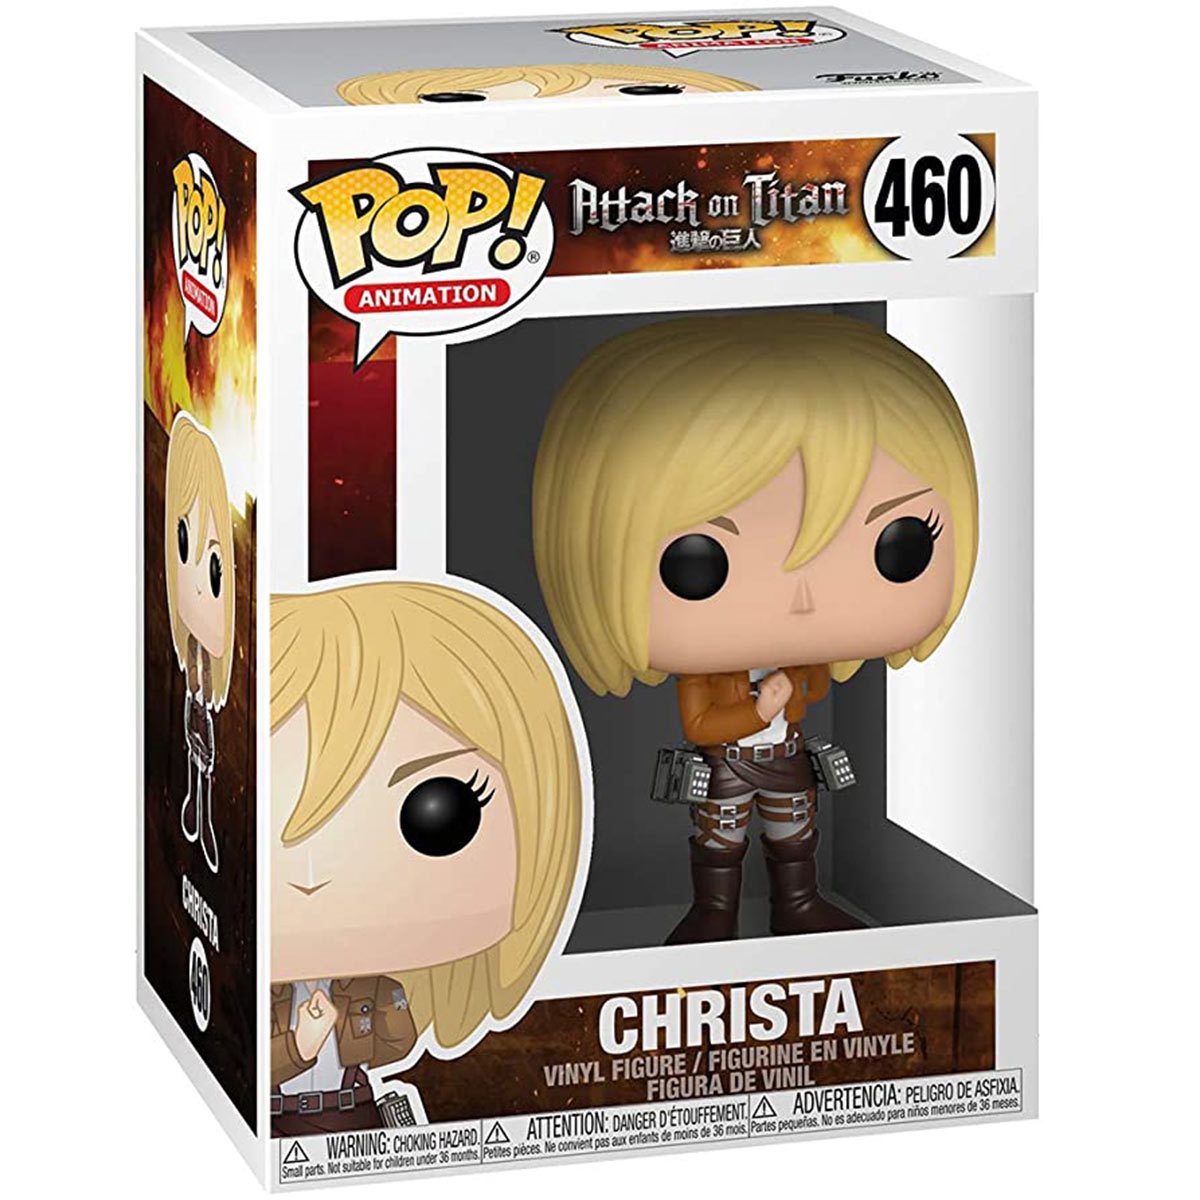 Attack on Titan - Pop! #460 - Christa Figure